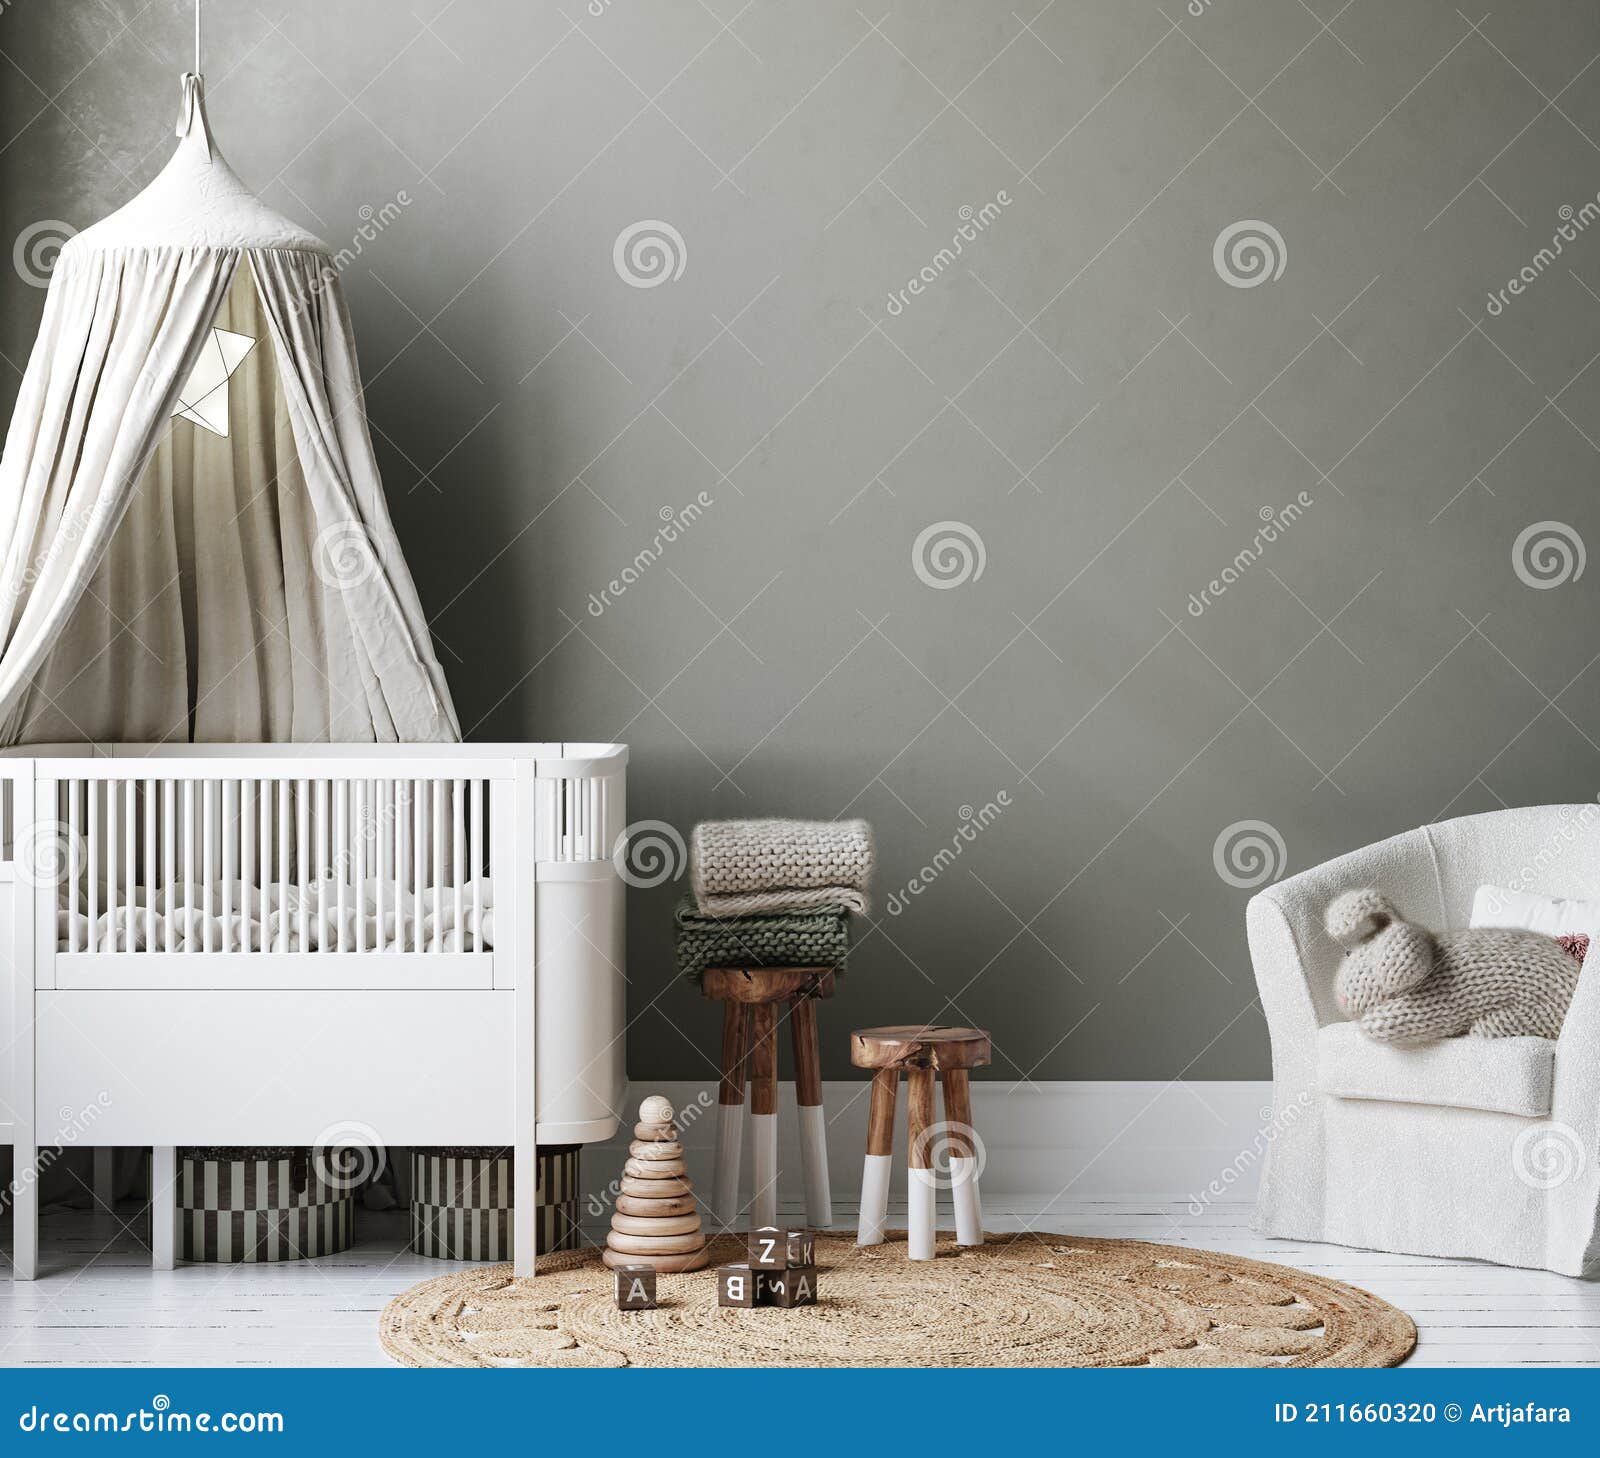 mock up frame in cozy nursery interior background, scandinavian style